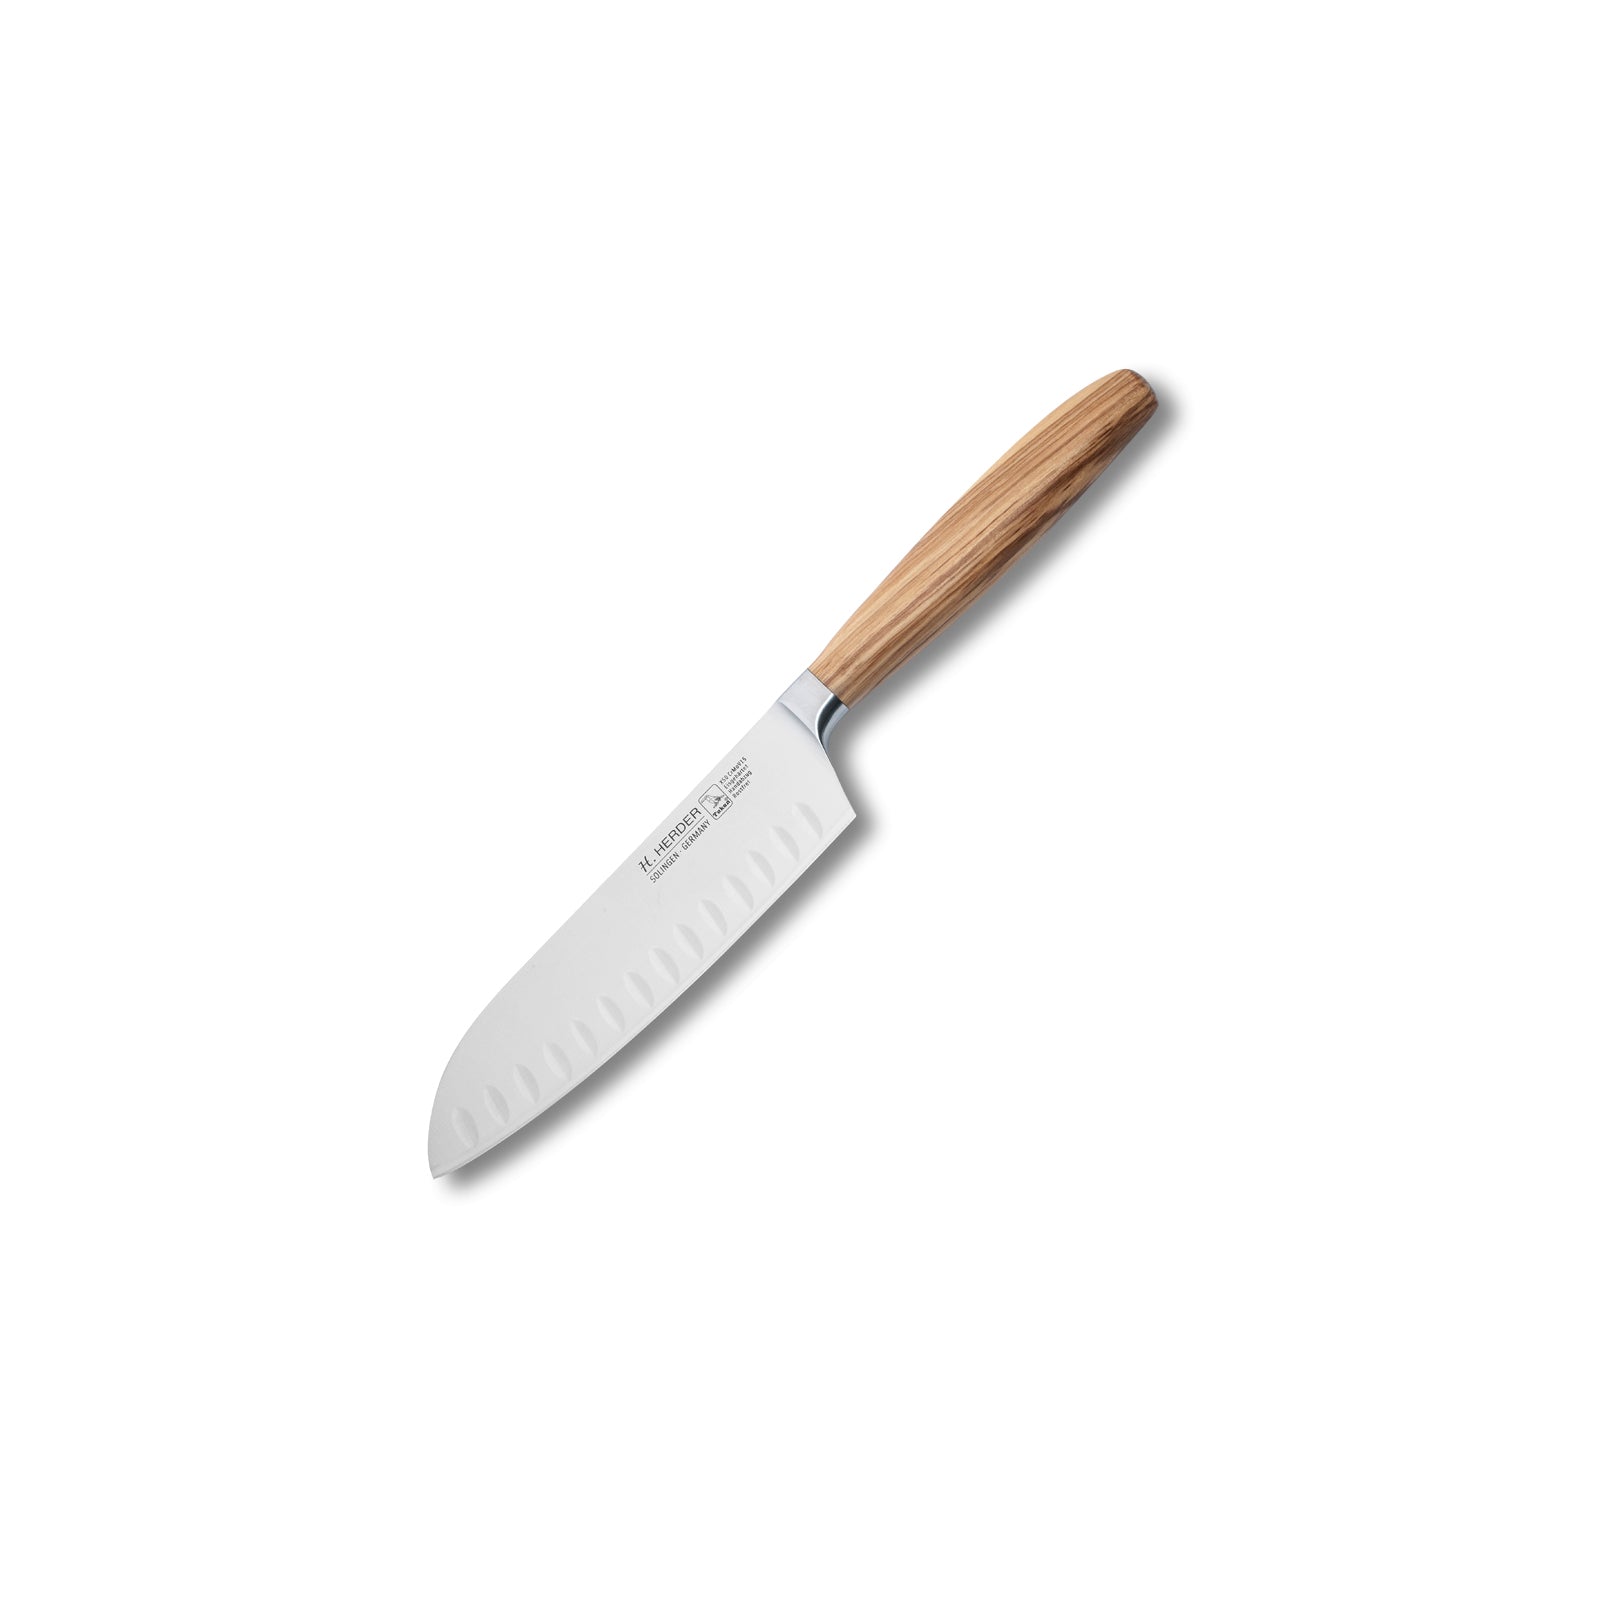 Santoku knife Eterno, olive wood, blade length 16cm, forged, hollow ground